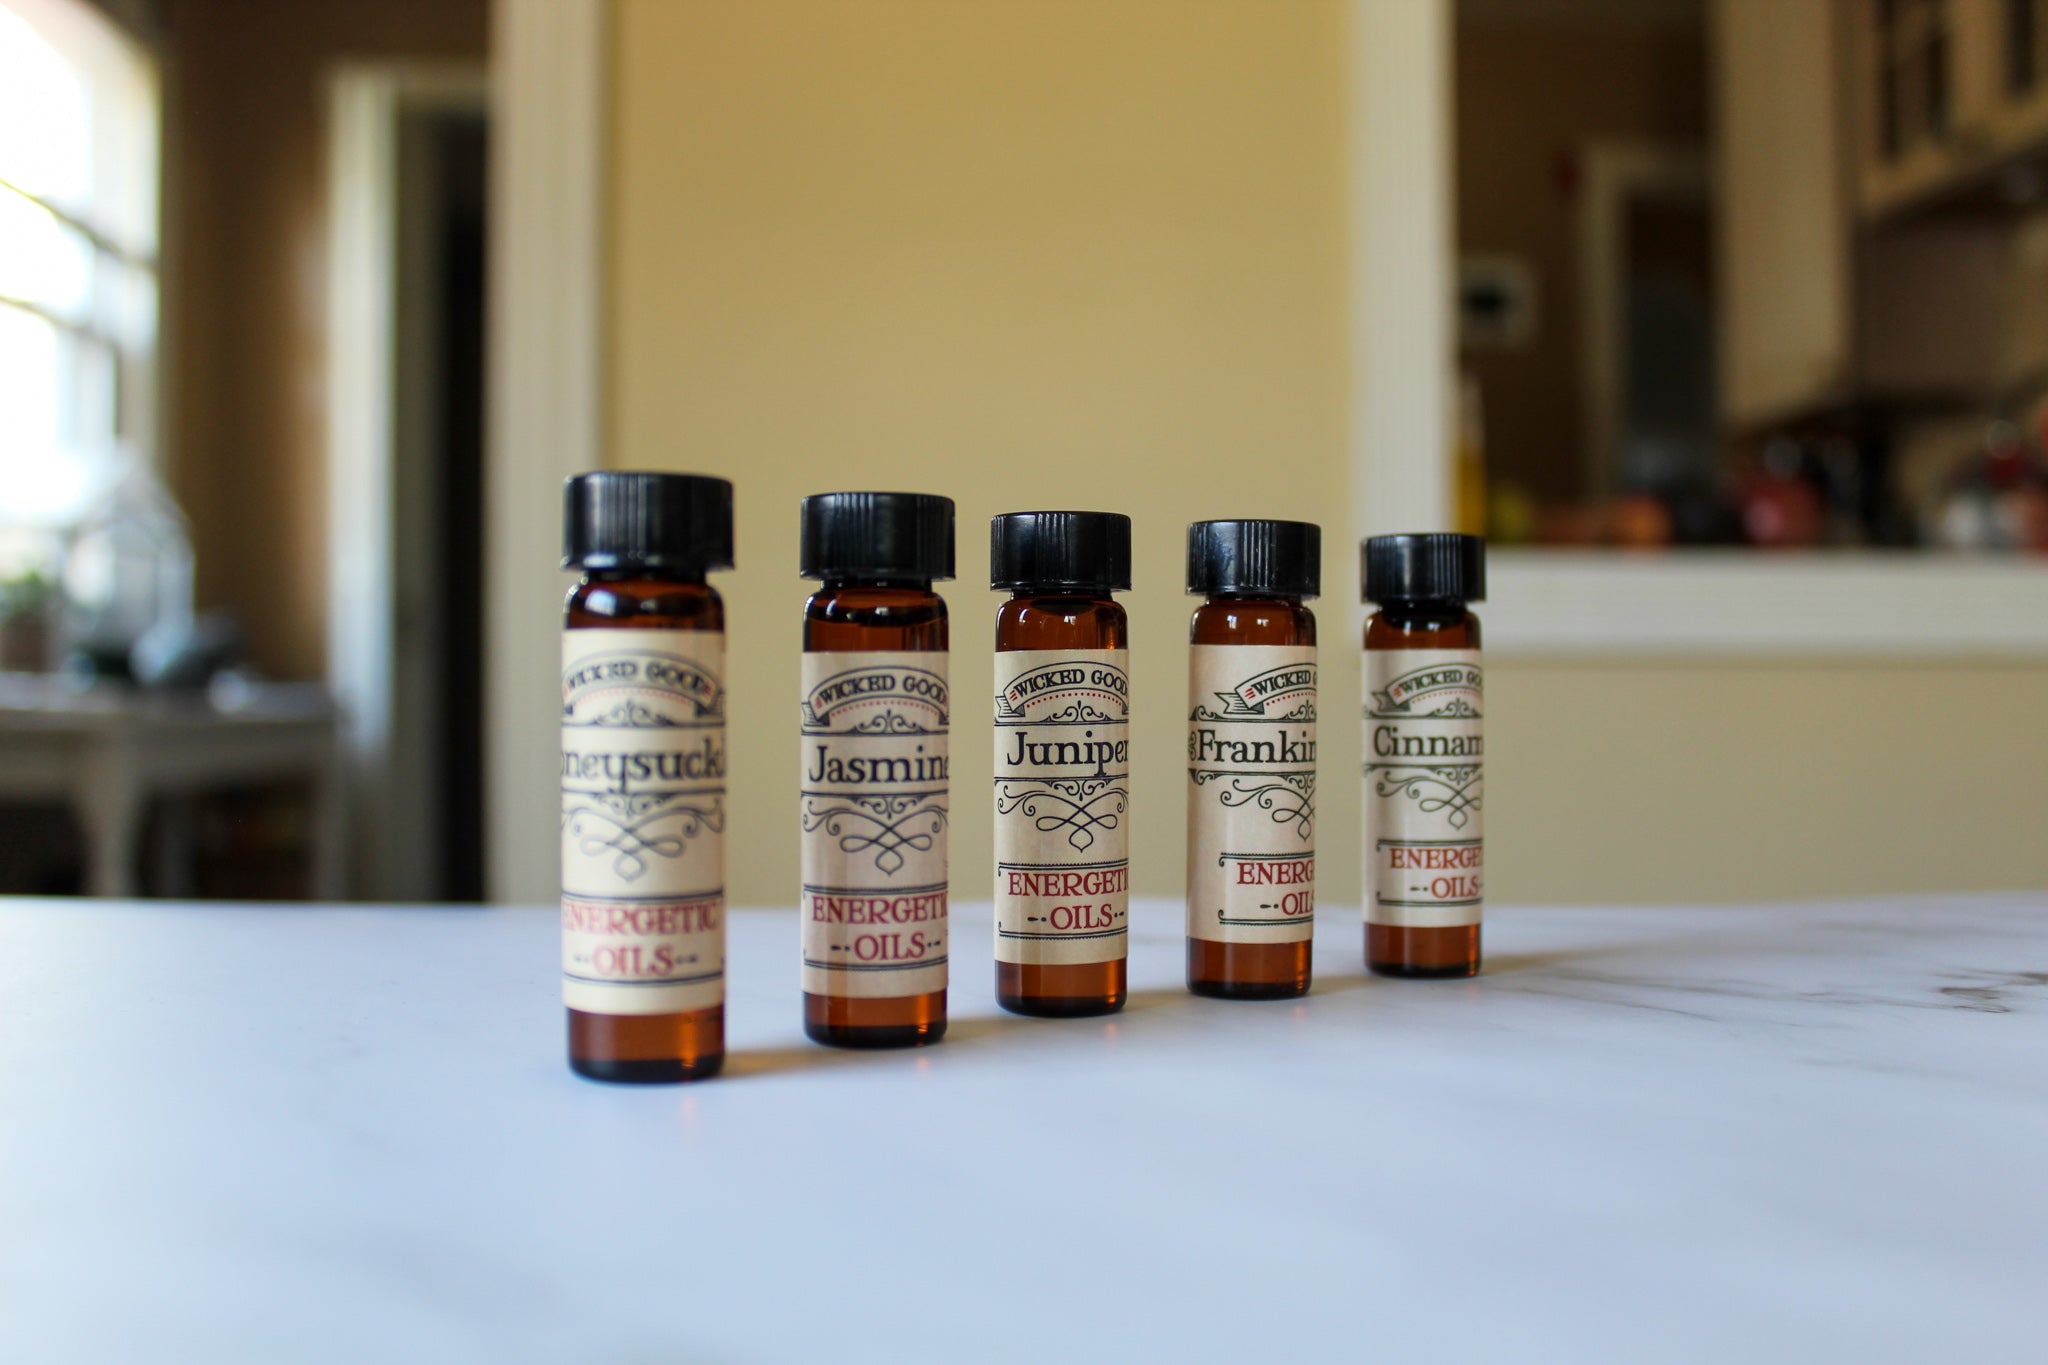 5 Coventry Creations Wicked Good Energetic Oil bottles. Honeysuckle, Jasmine, Juniper, Frankincense, and Cinnamon.